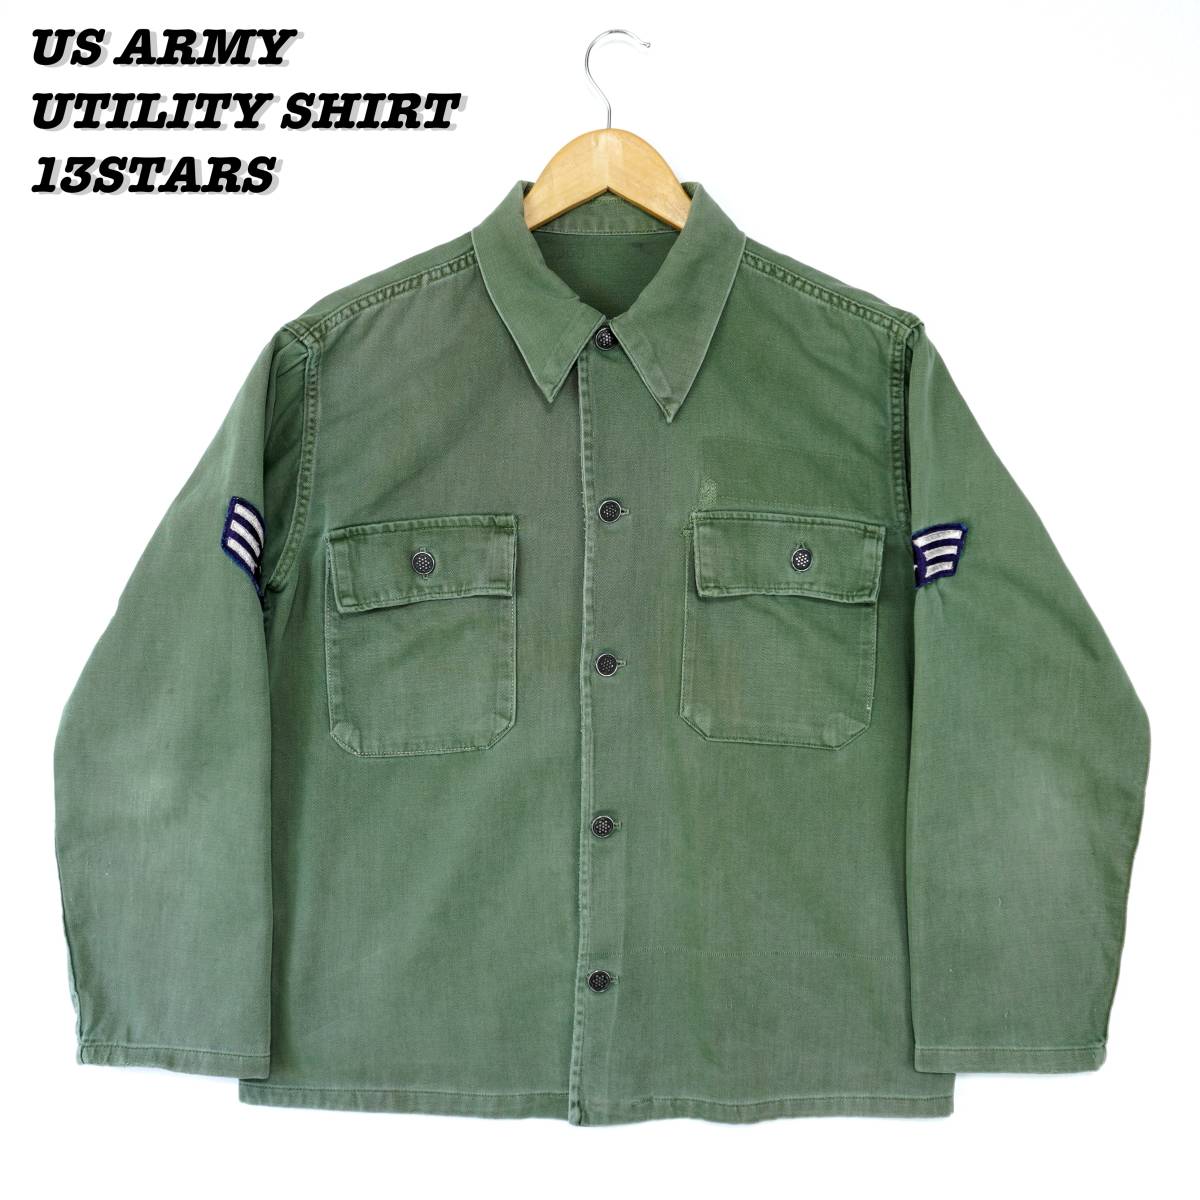 US ARMY UTILITY SHIRT 13STARS BUTTOM 1950s SHIRT23183 Vintage アメリカ軍 ユーティリティーシャツ 1950年代 13スターボタン